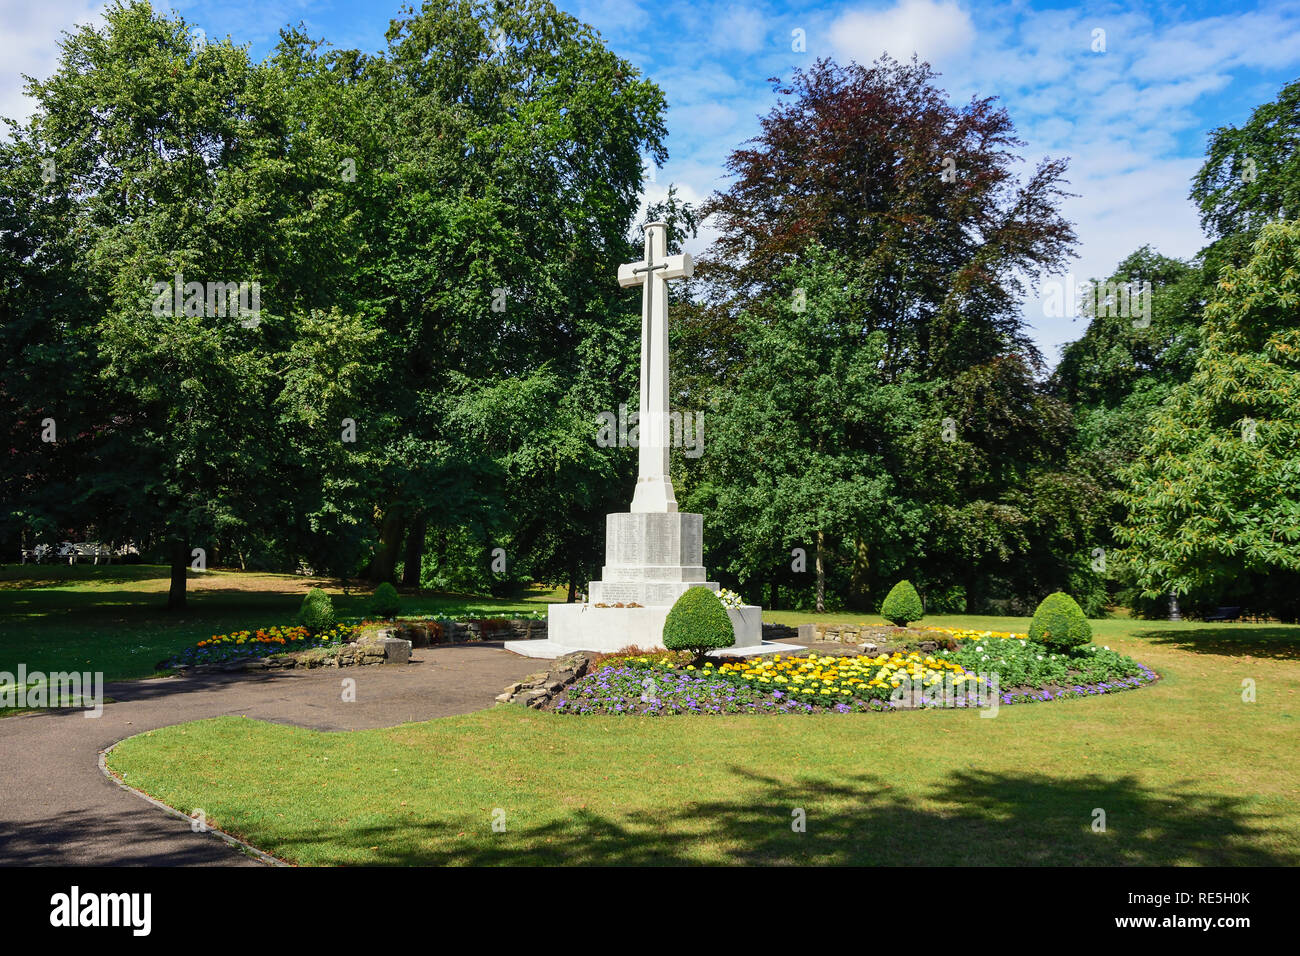 The Cenotaph, Hexham Park, Beaumont Street, Hexham, Northumberland, England, United Kingdom Stock Photo